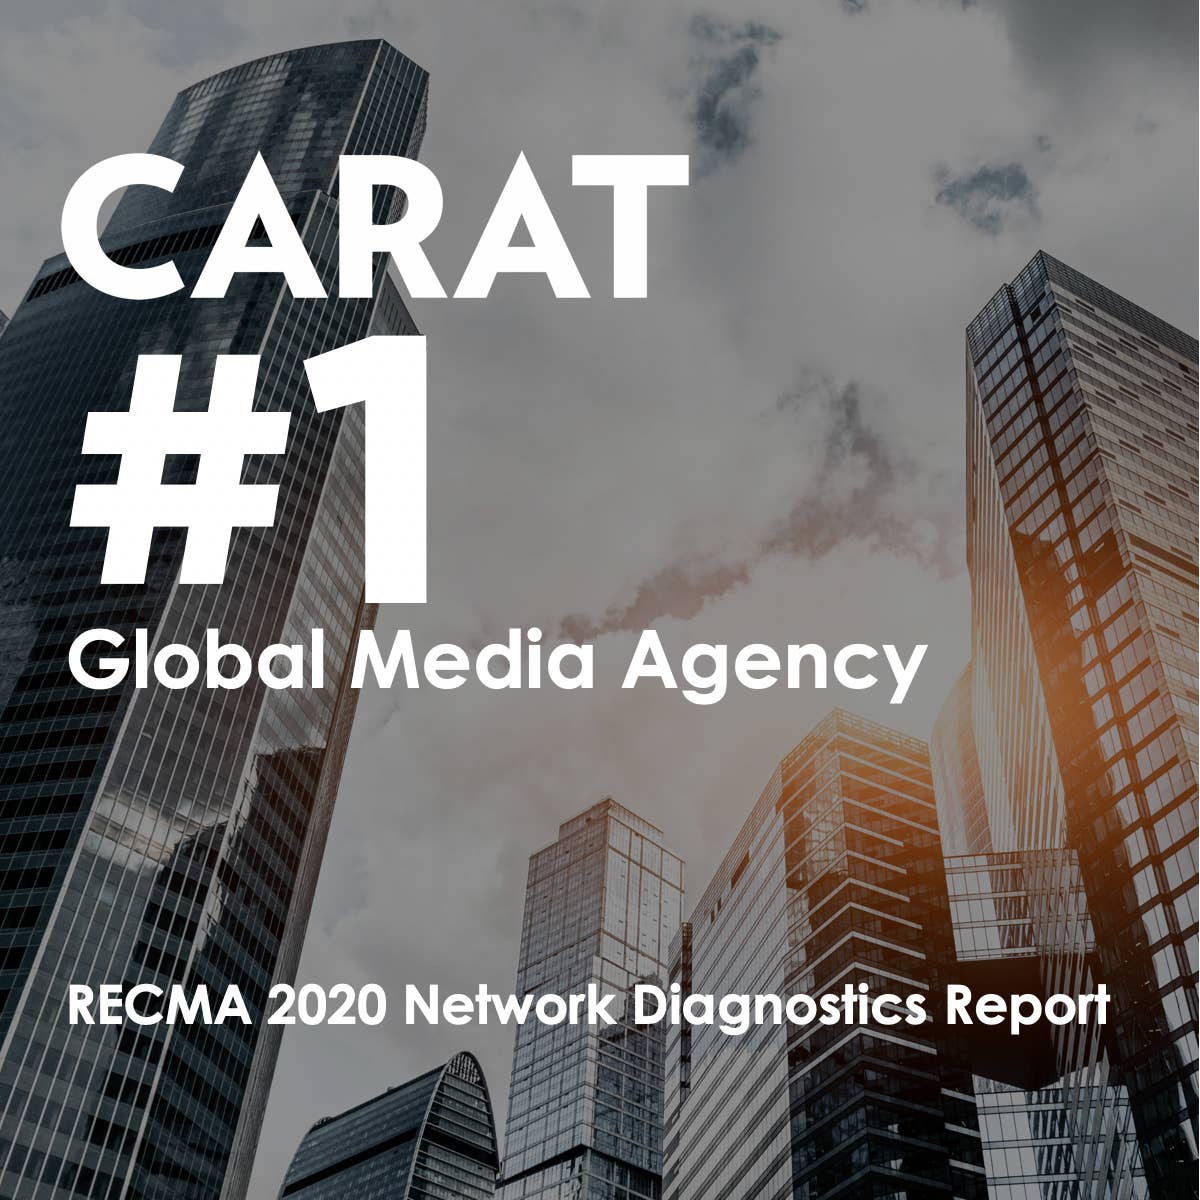 Carat Retains #1 Position in RECMA